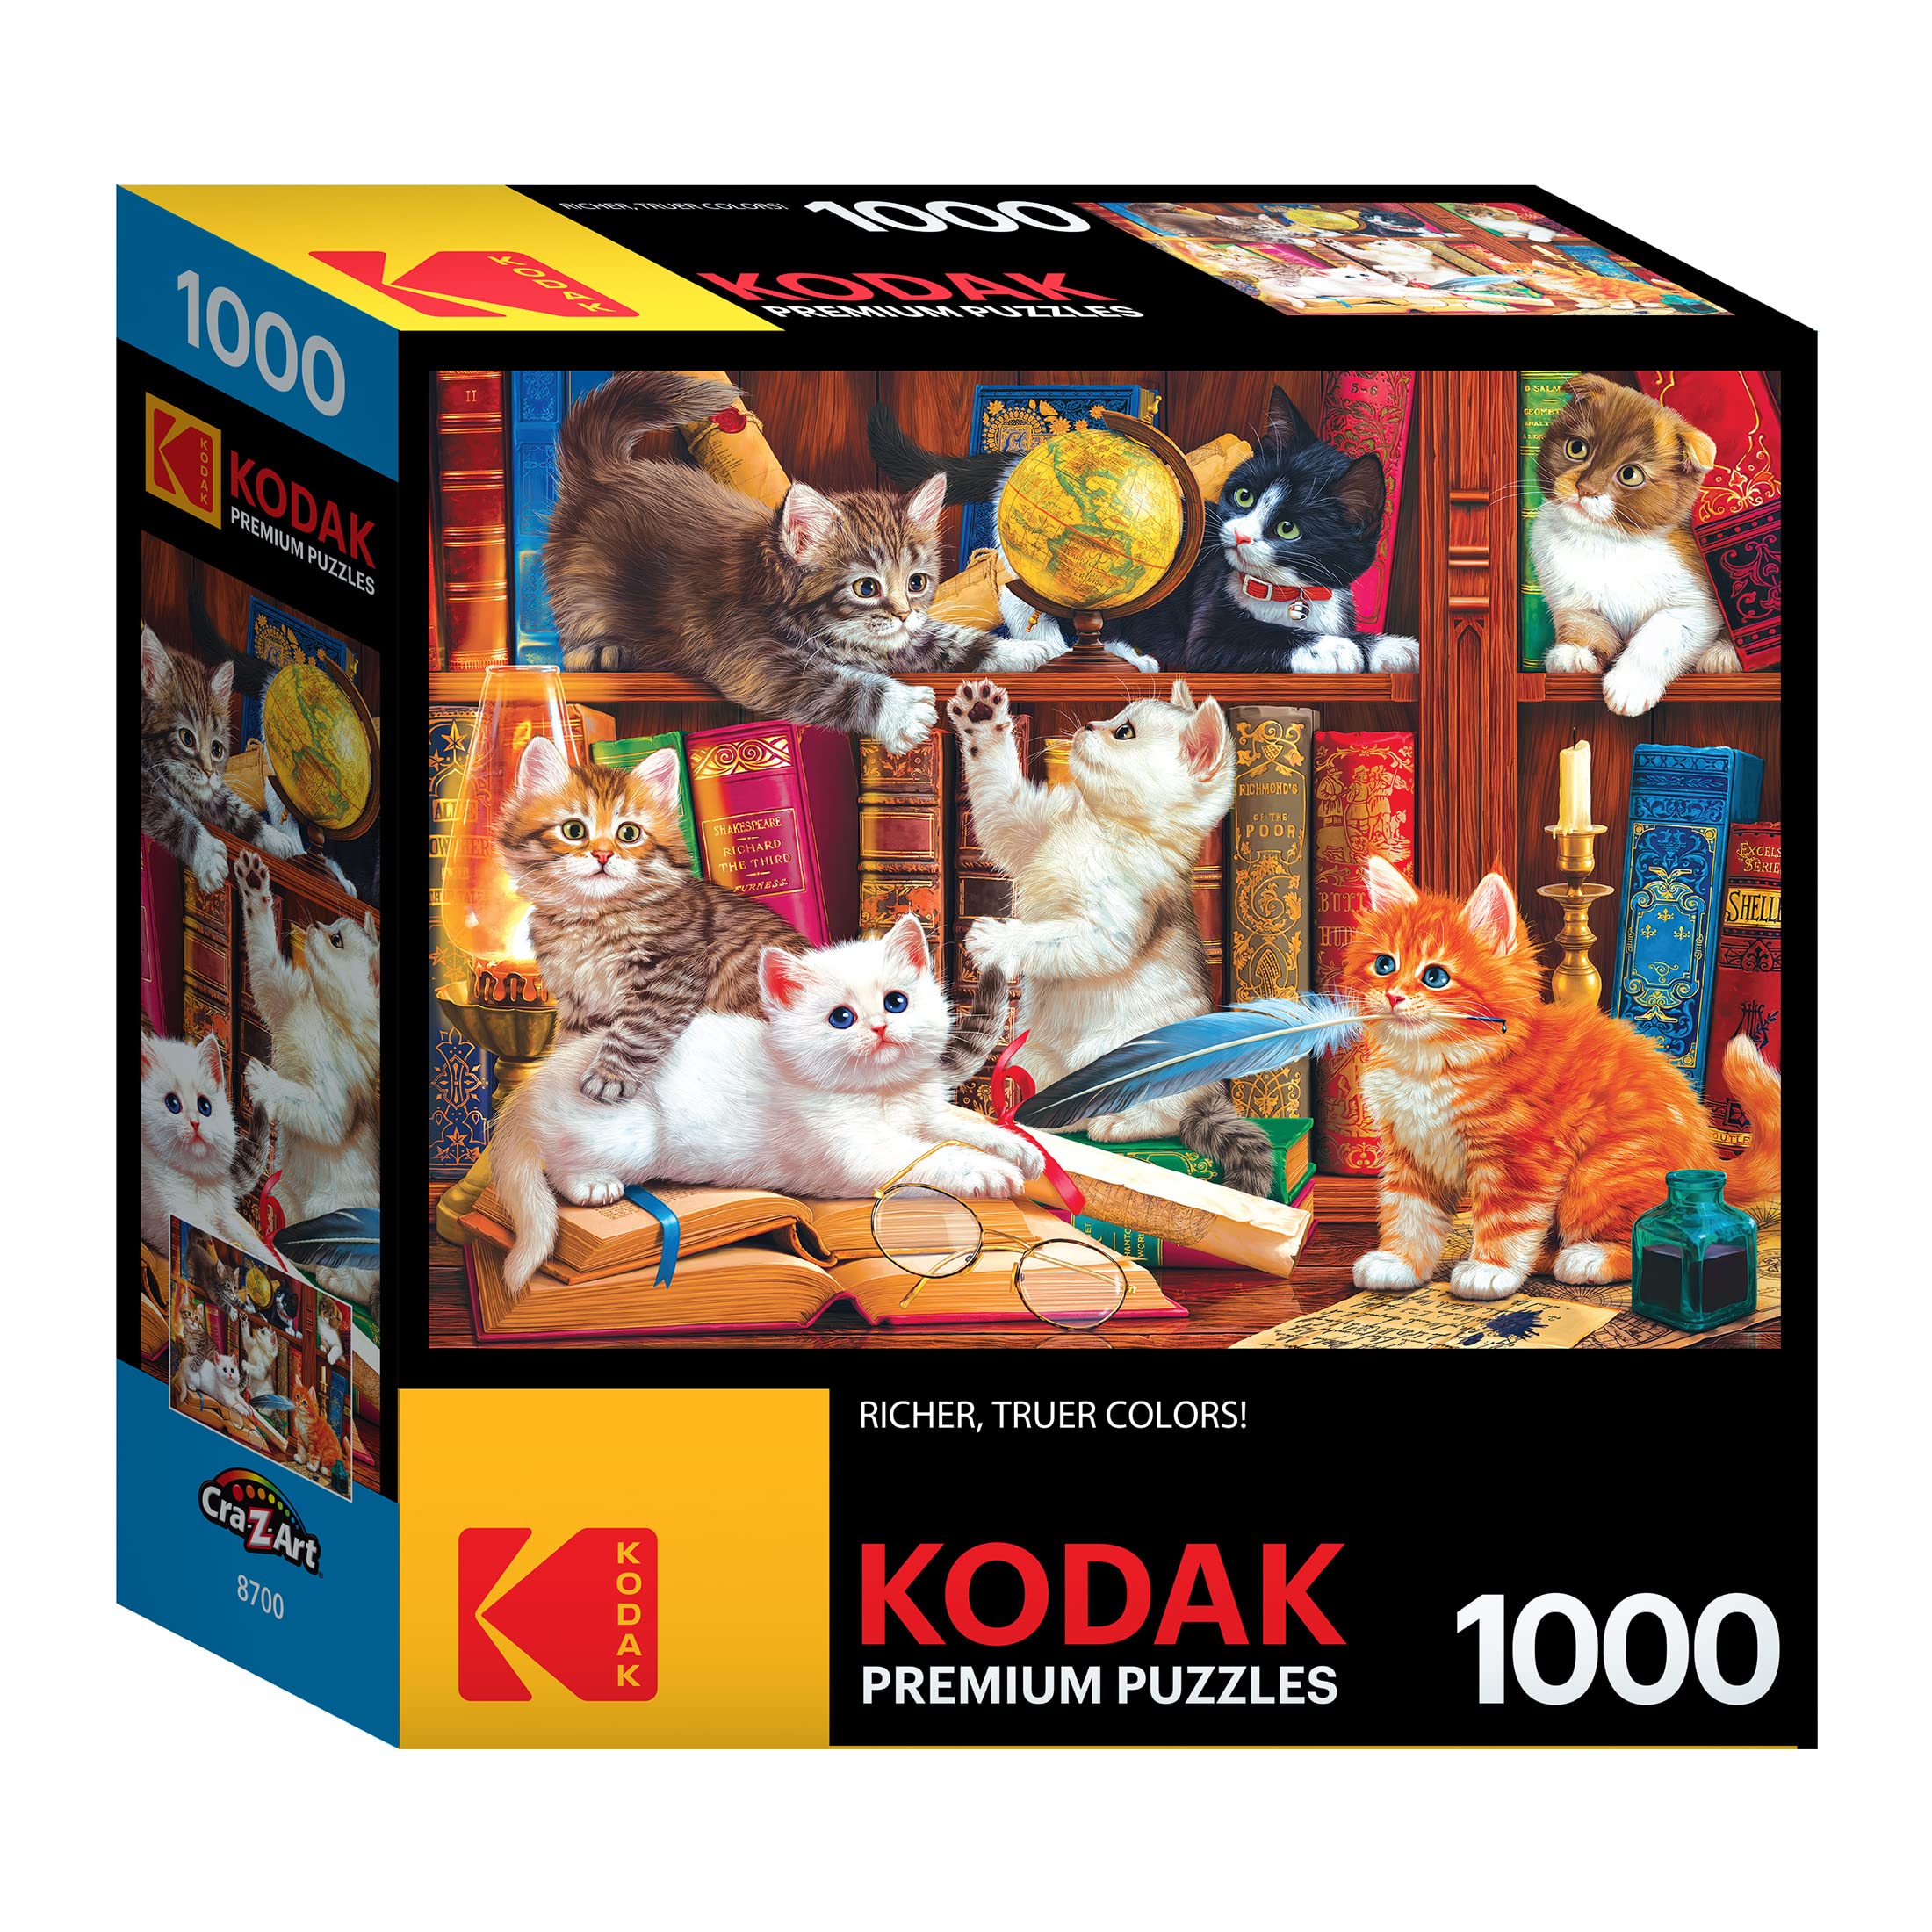 Kodak Premium Jigsaw Puzzle 1000pc Library Mischief